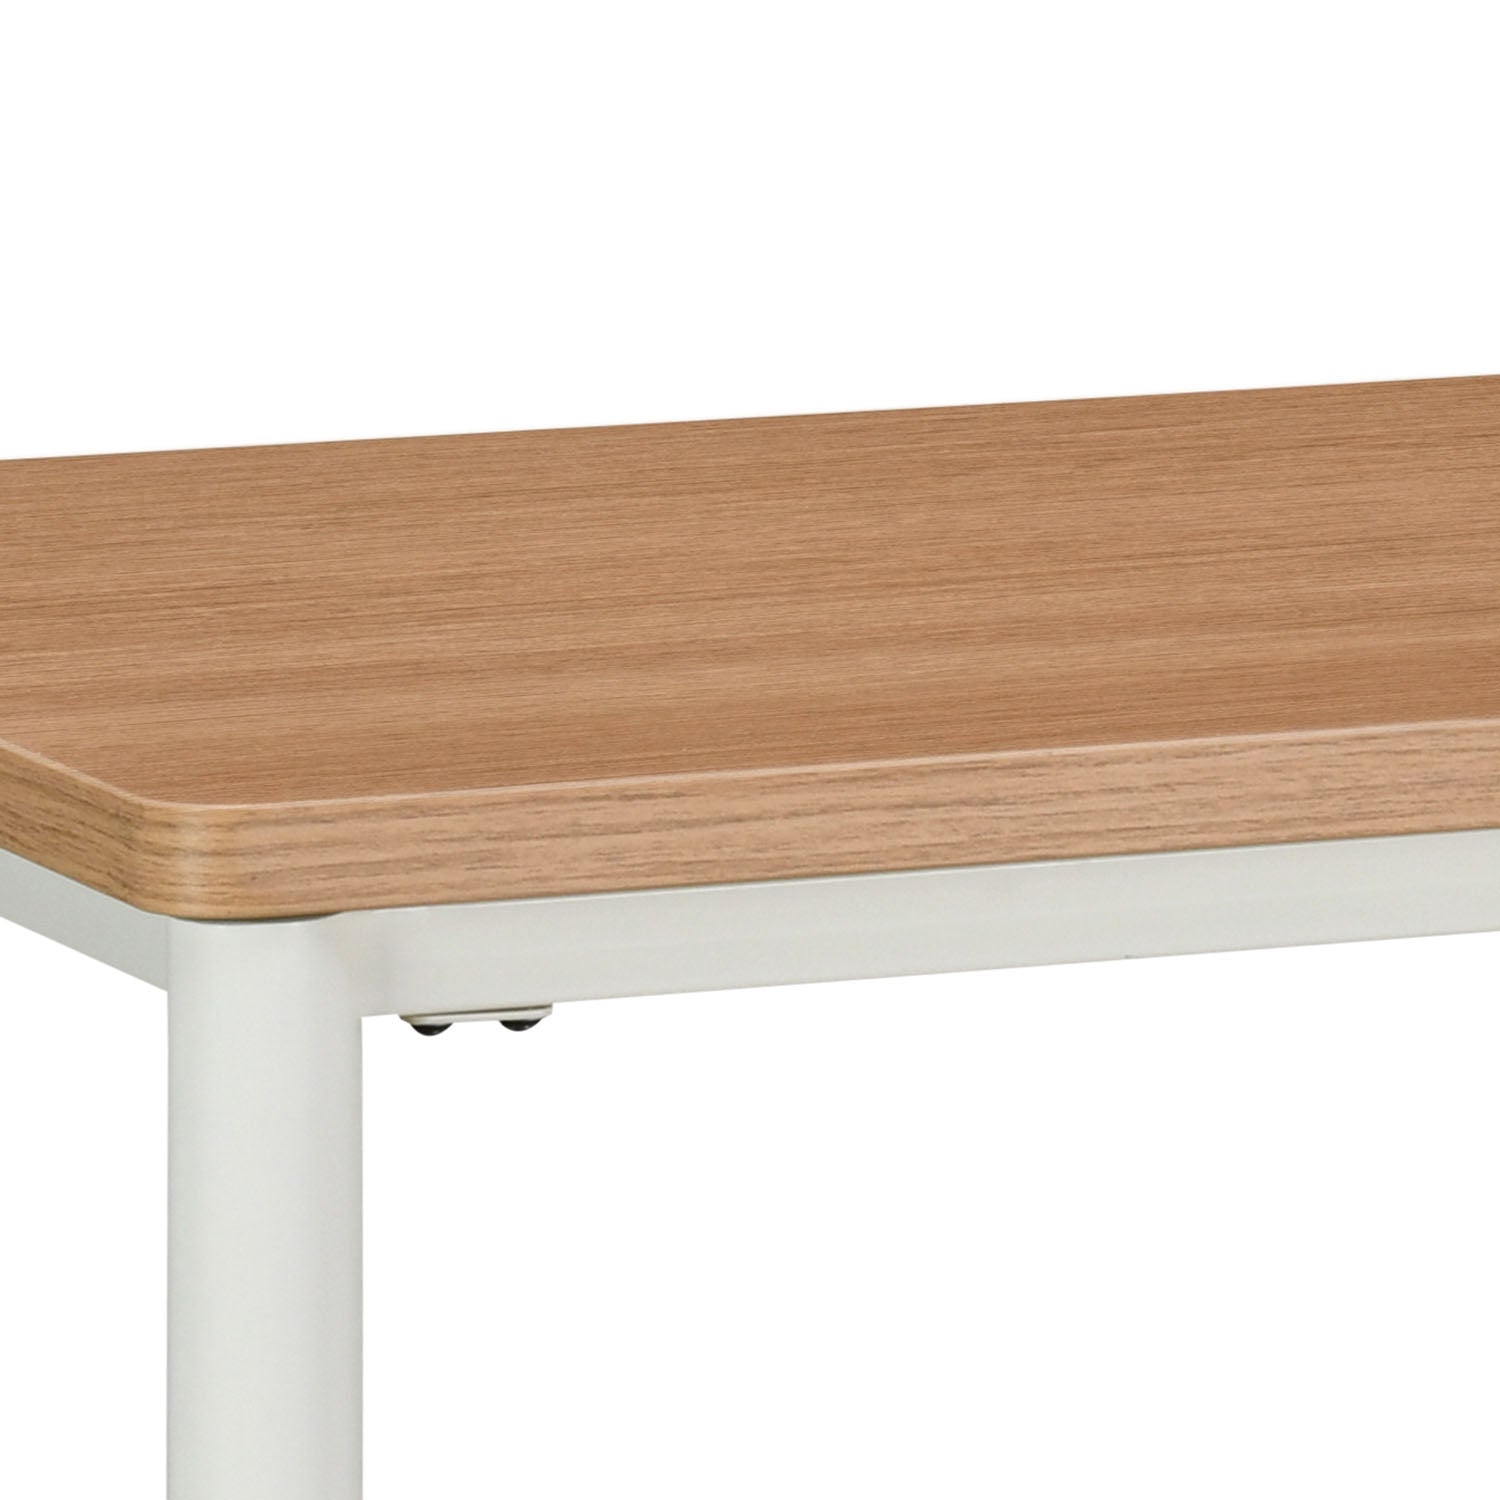 Ember Engineered Wood 4 Seater Dining Table (Urban Teak)